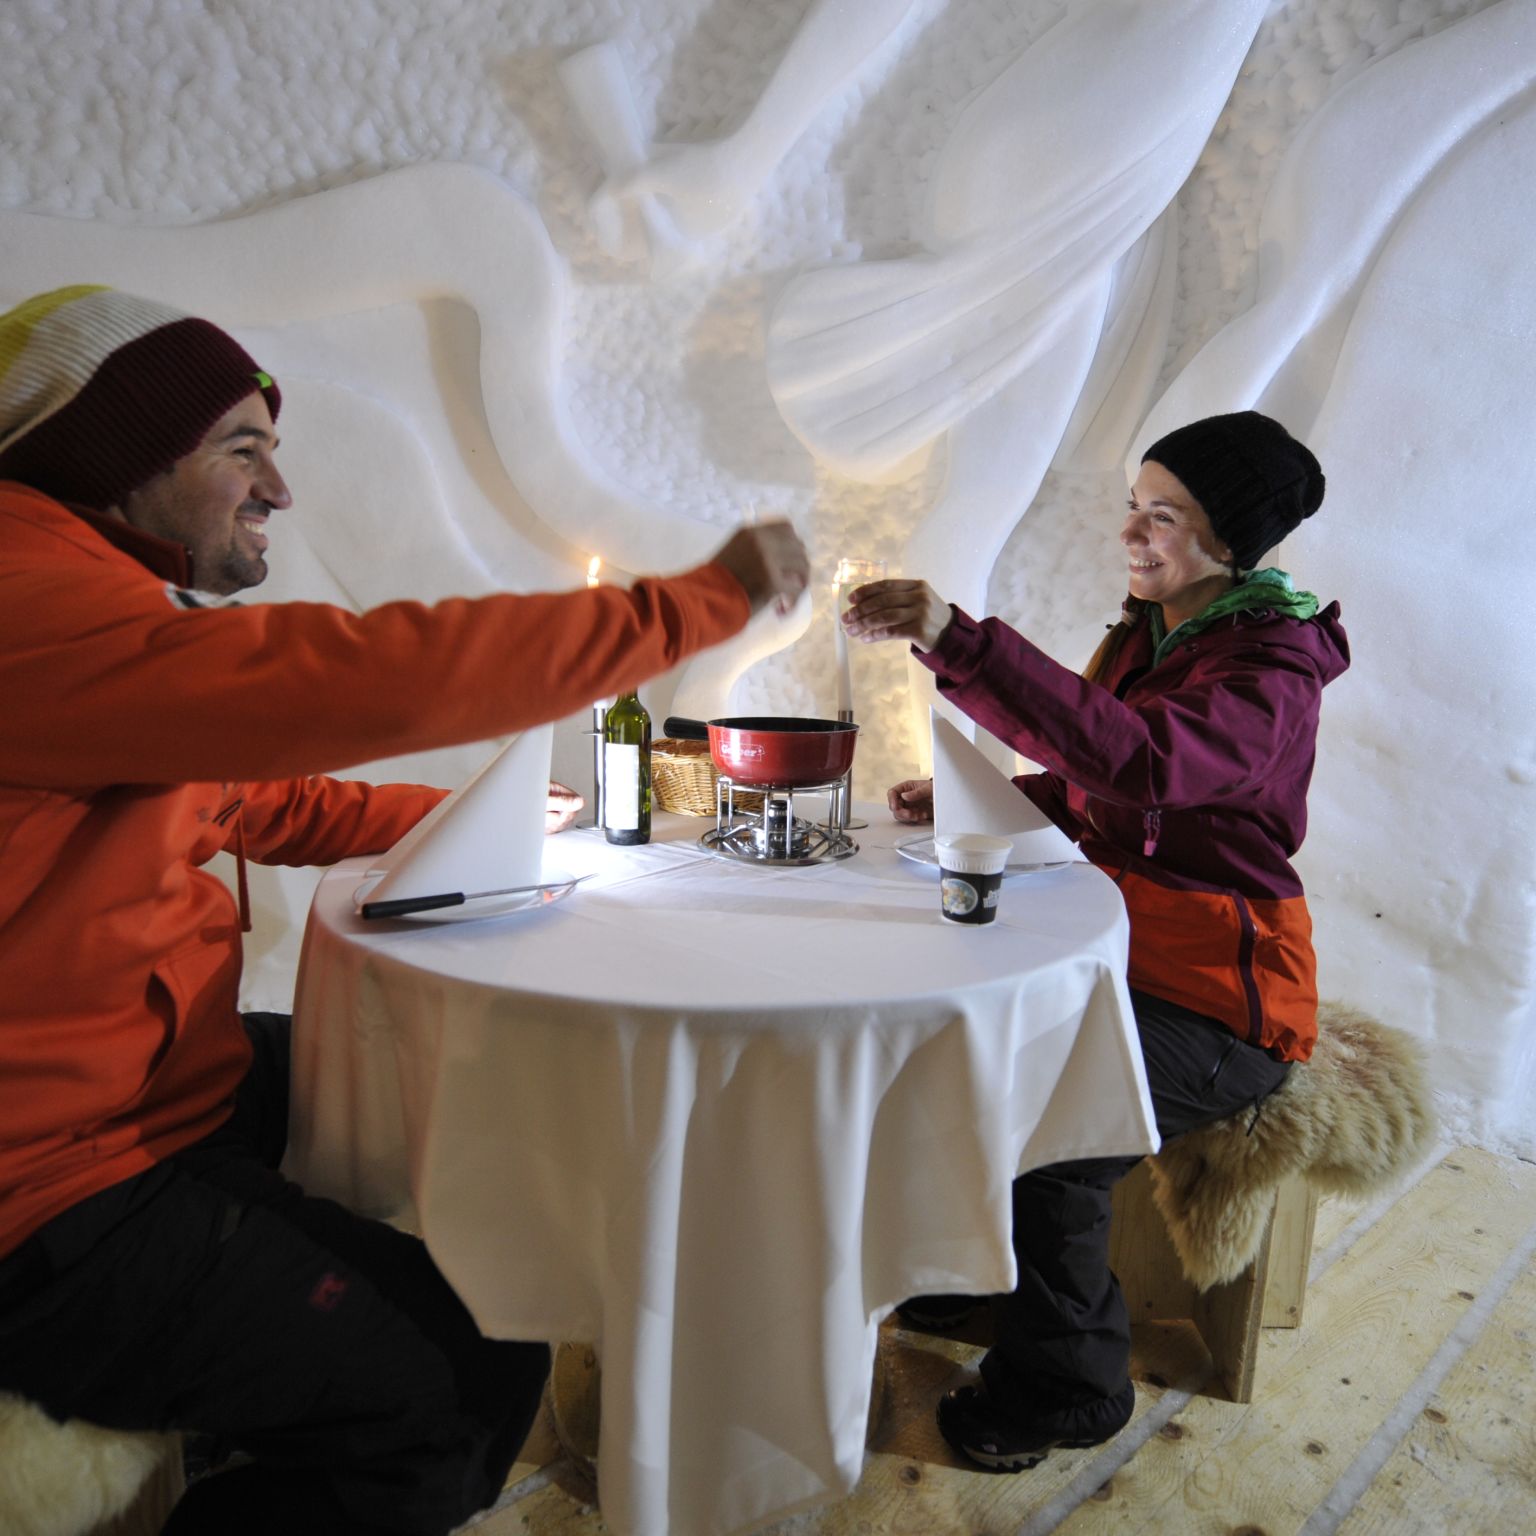 Tasting a good fondue in an igloo, Valais Wallis Switzerland